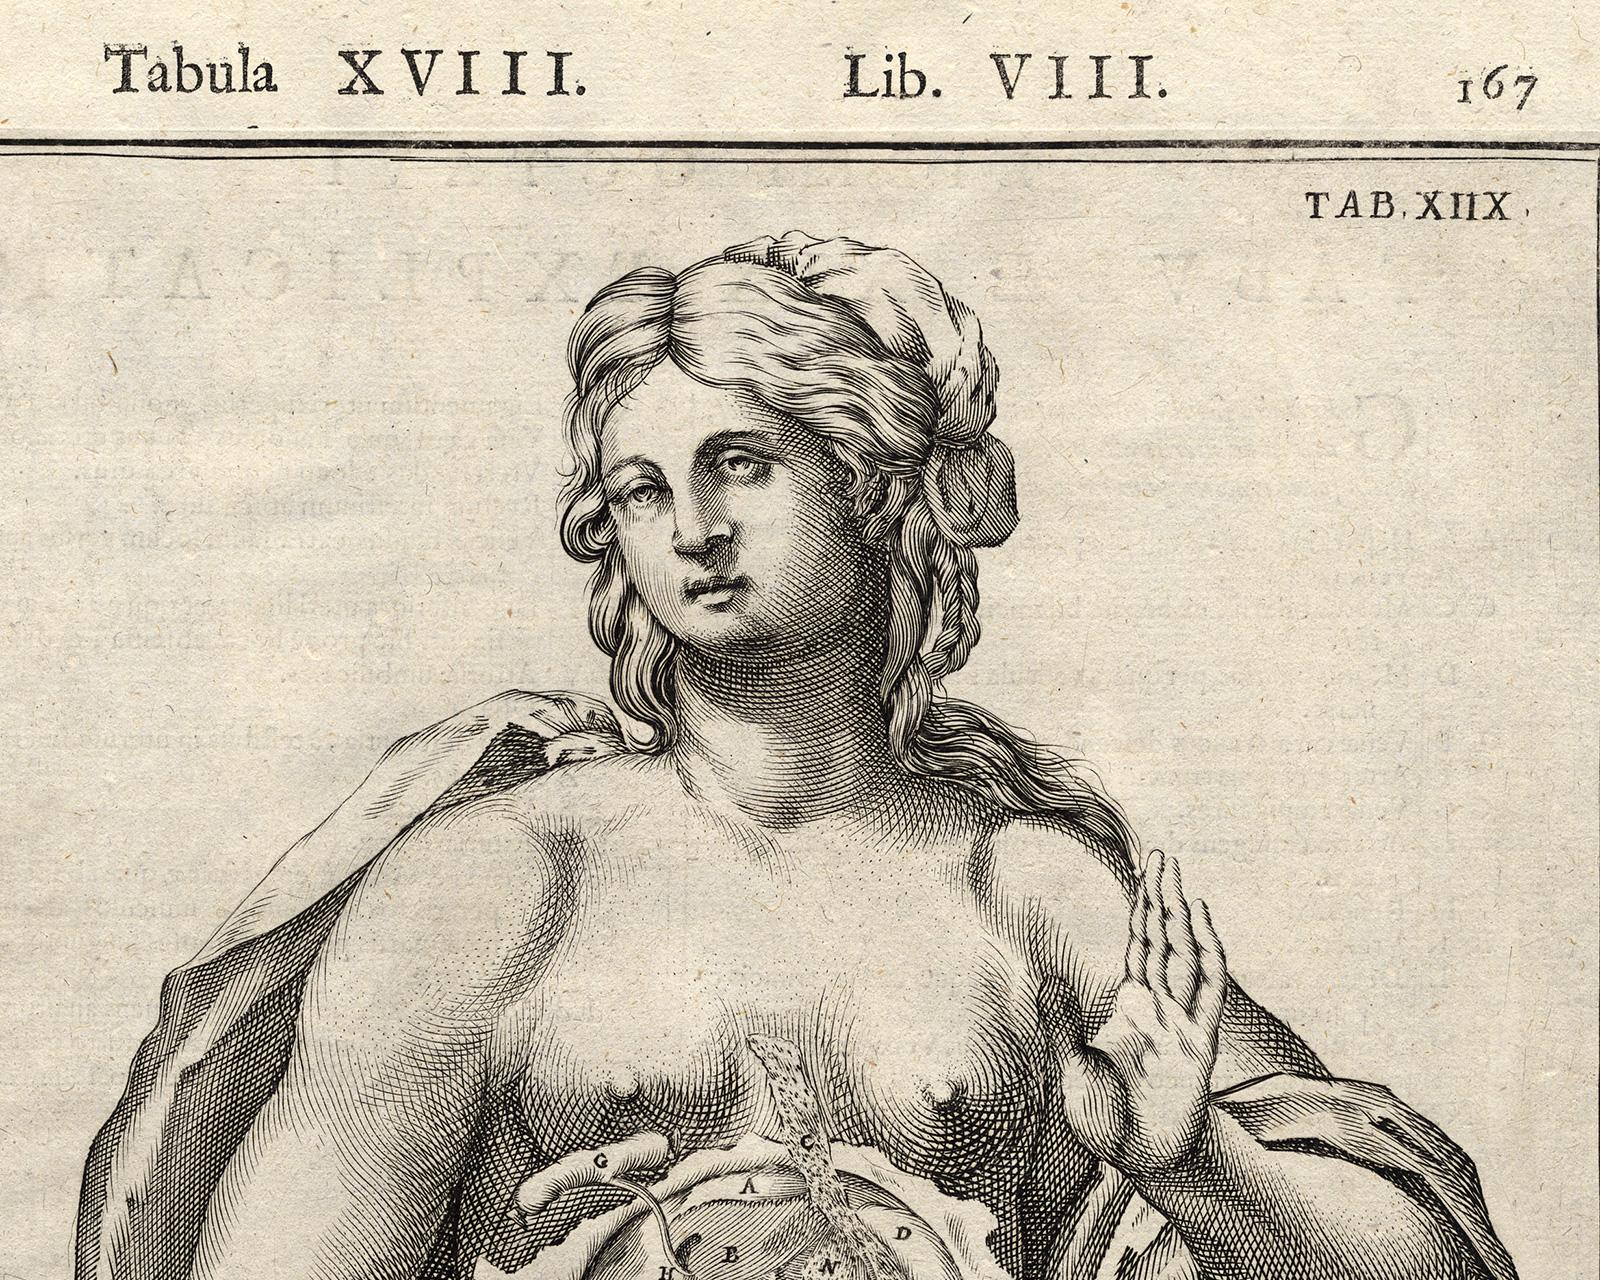 2 anatomical prints - Woman's abdomen by Spigelius - Engraving - 17th century - Print by Adrianus Spigelius